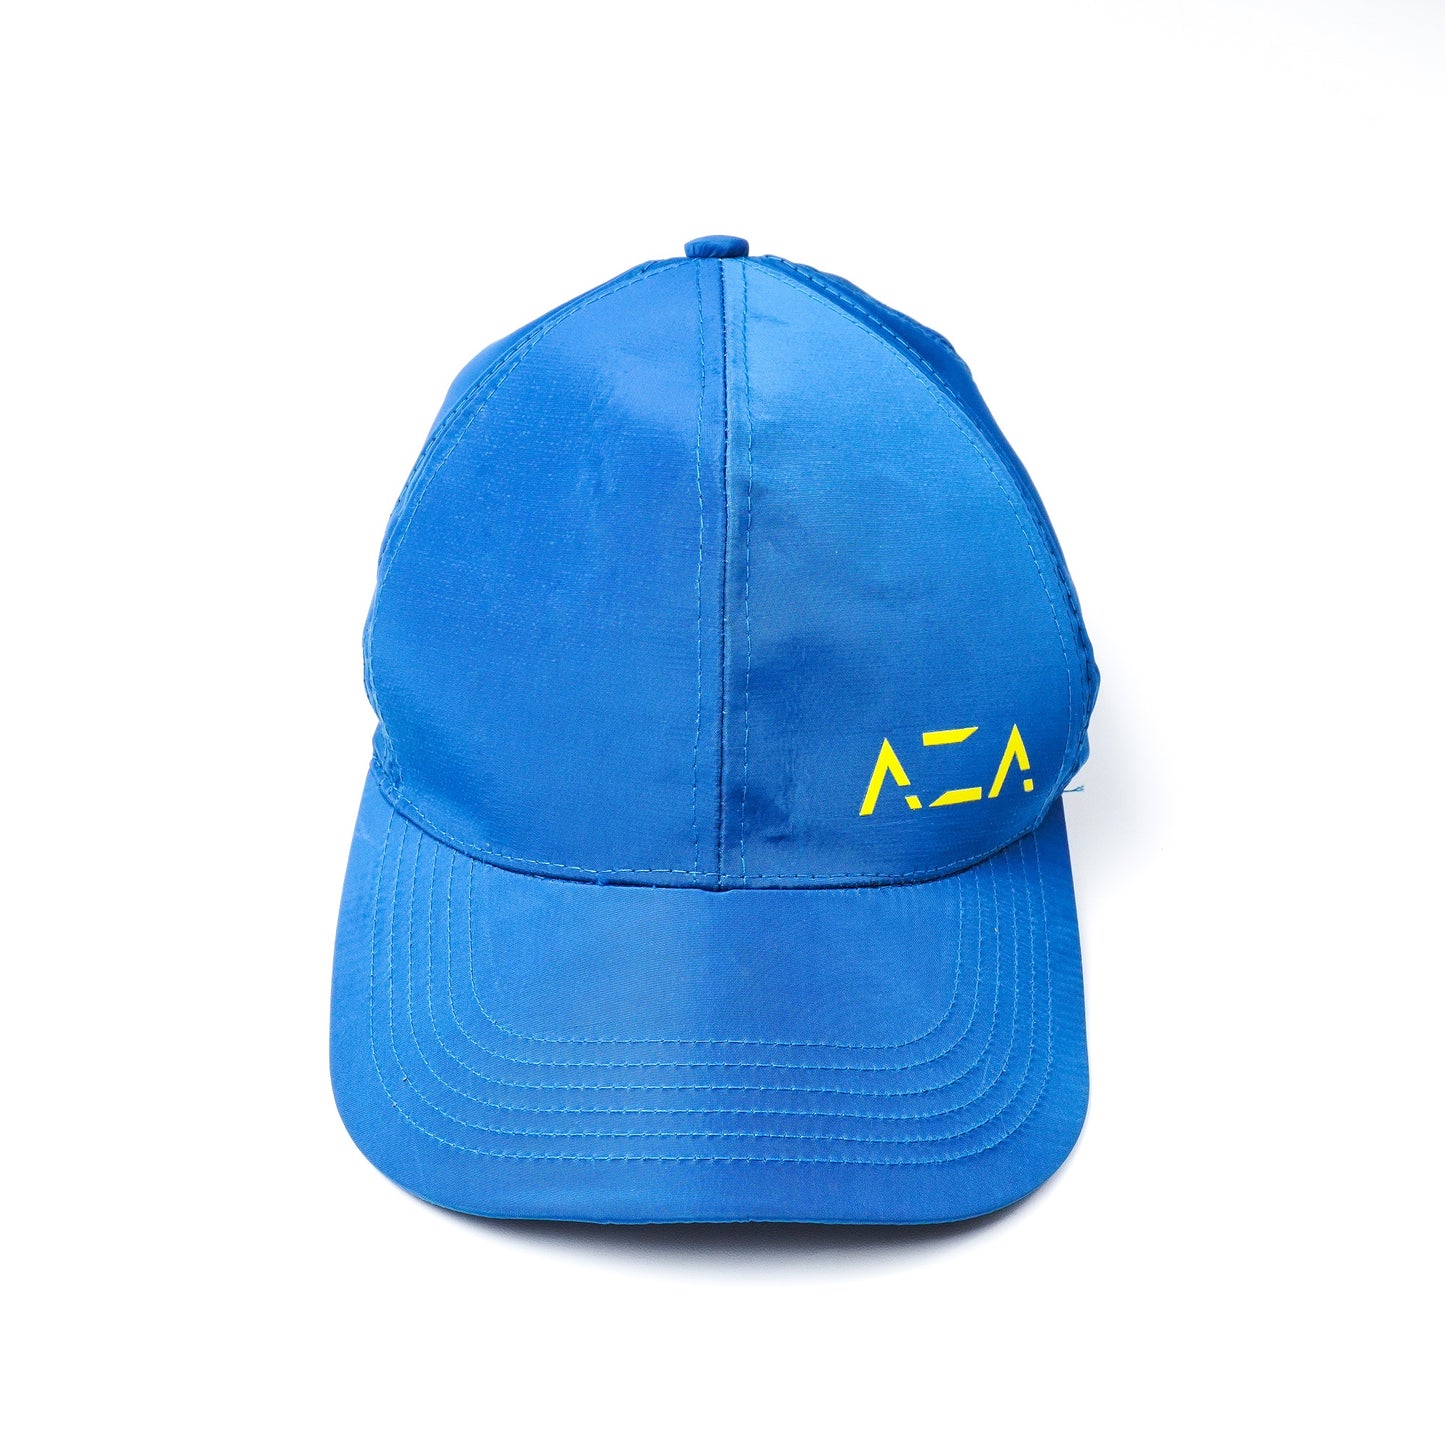 AZA Polo Cap Simple Colorblock- Deep Blue